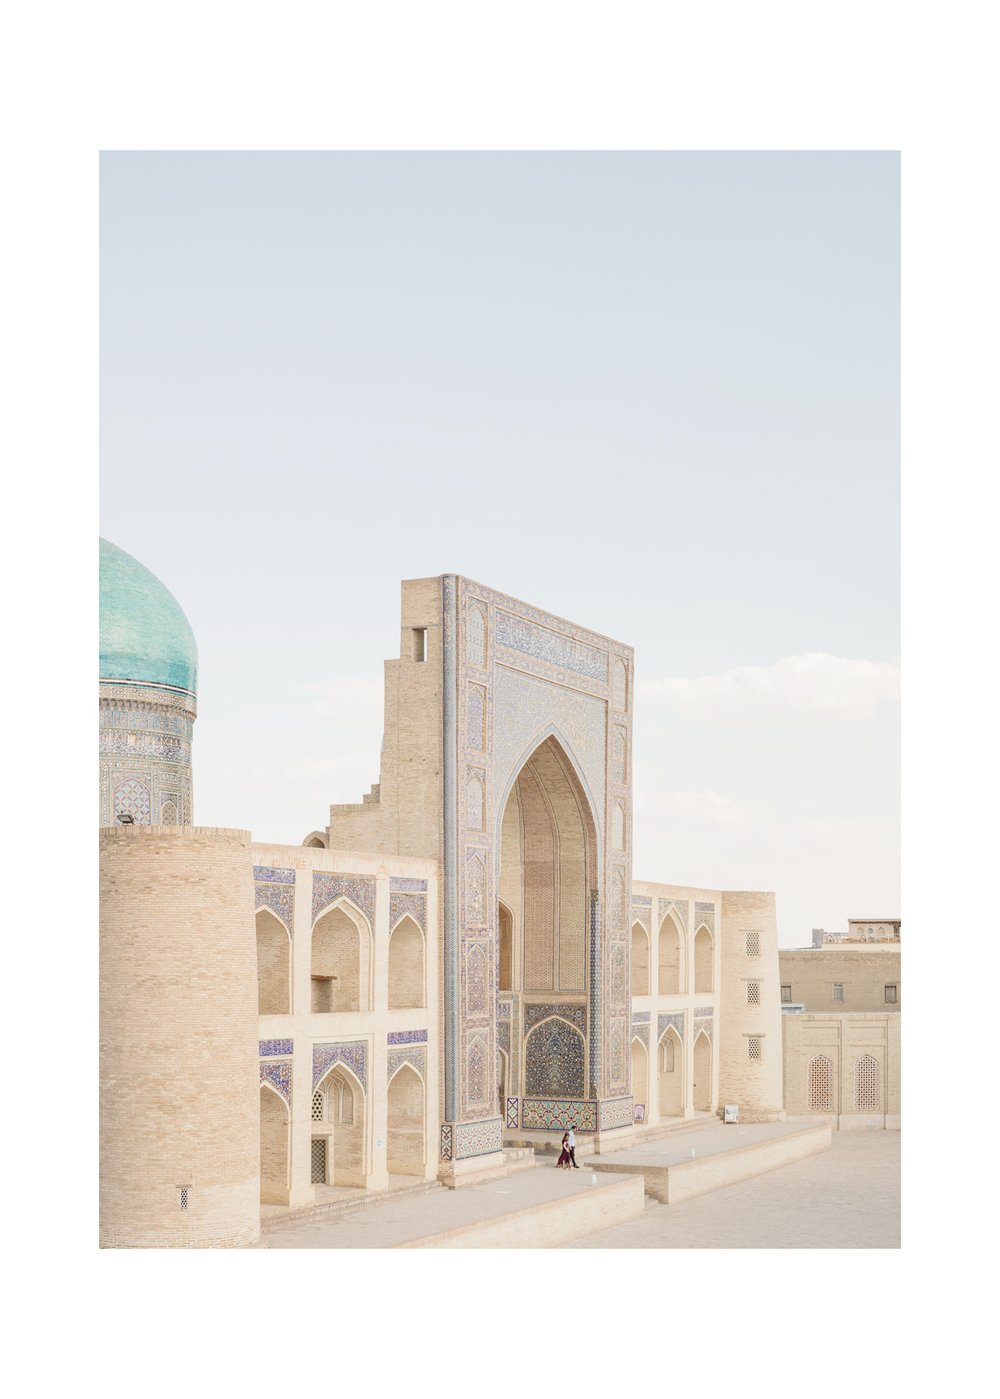 Image of Mir-I-Arab-Madrasa, Bukhara